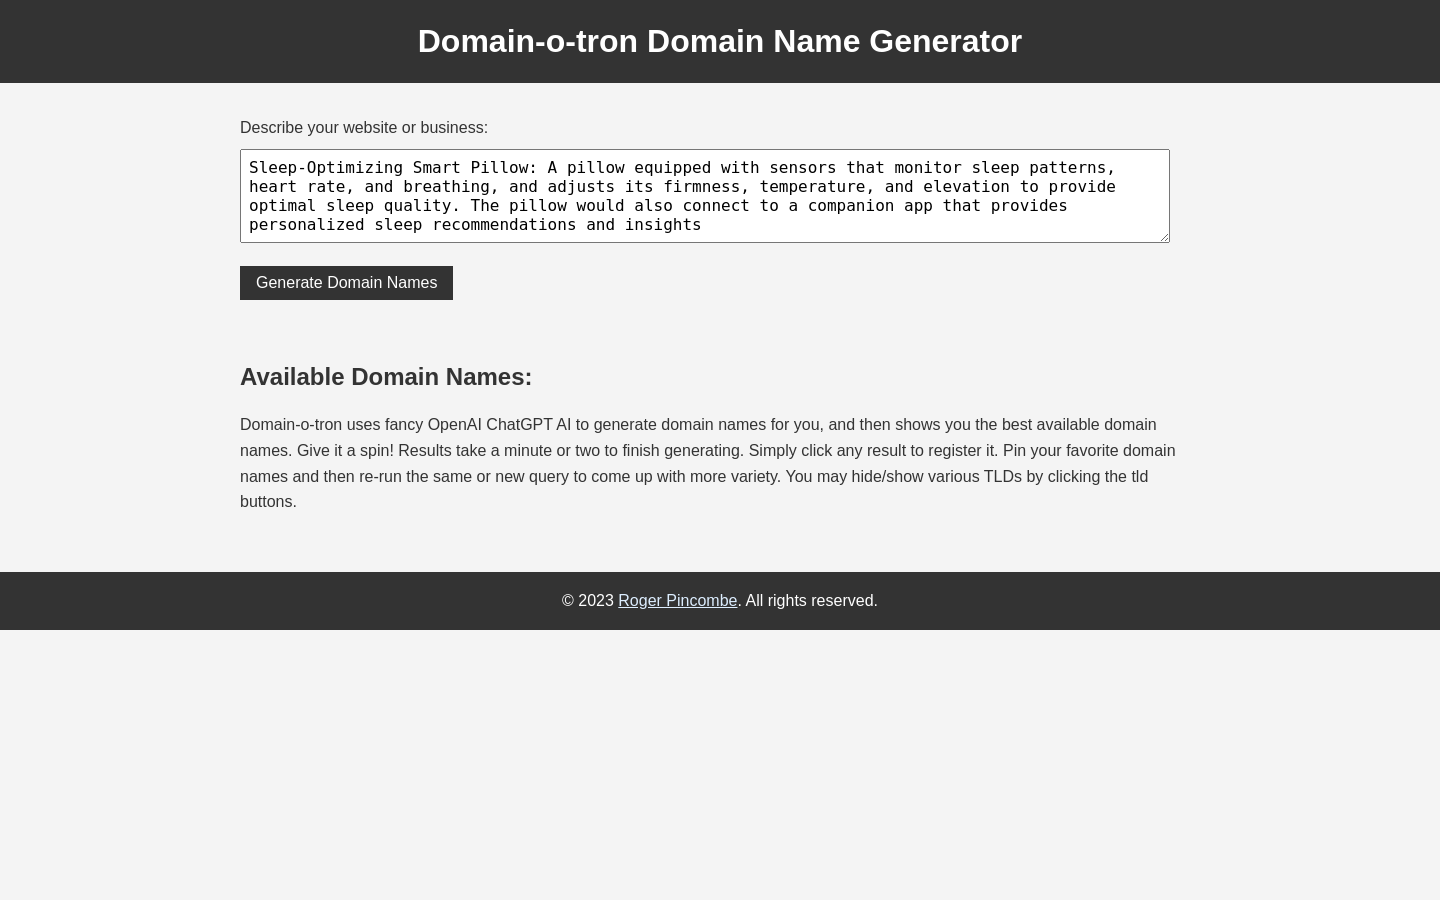 Domain-o-tron preview